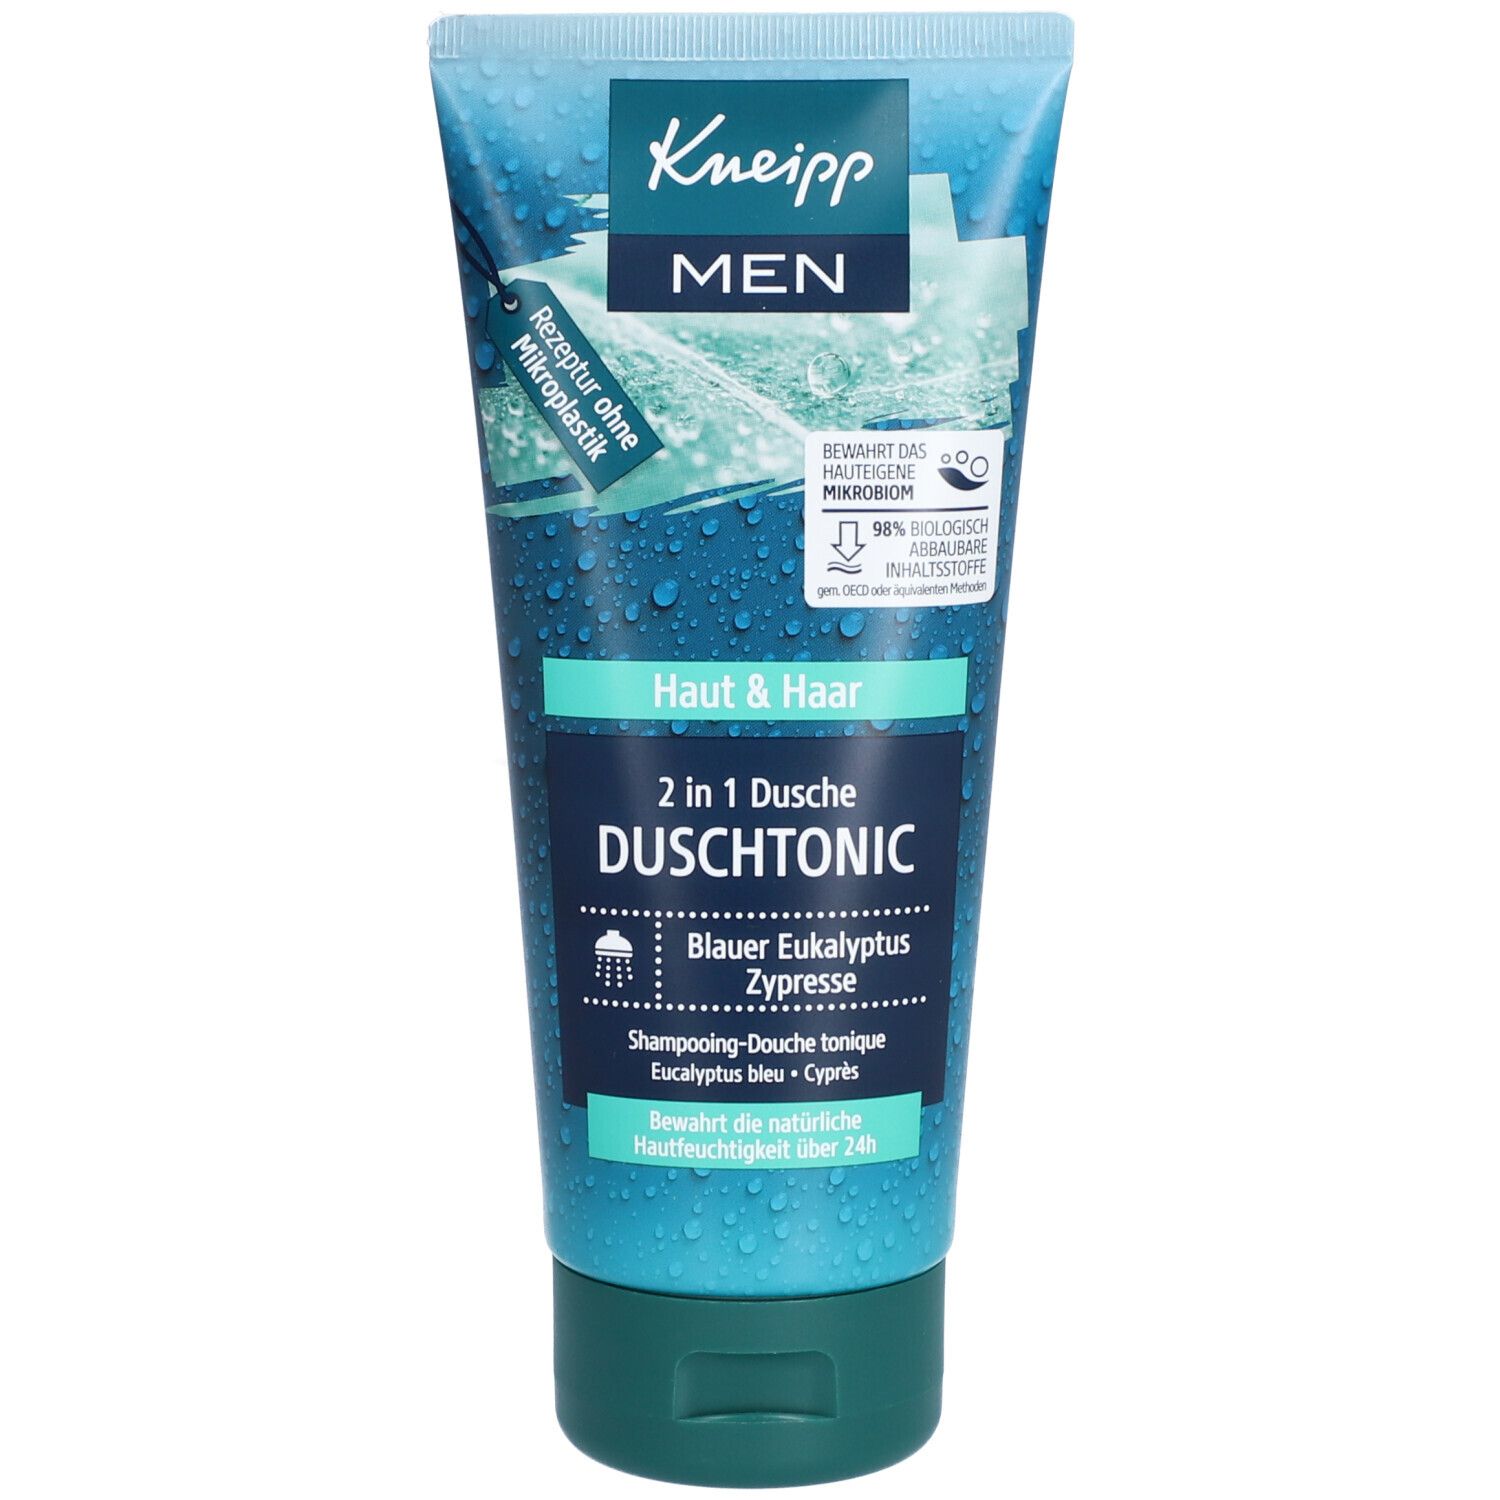 Kneipp® Dusch Tonic Männer 2 in 1 Blauer Eukalyptus & Zypresse